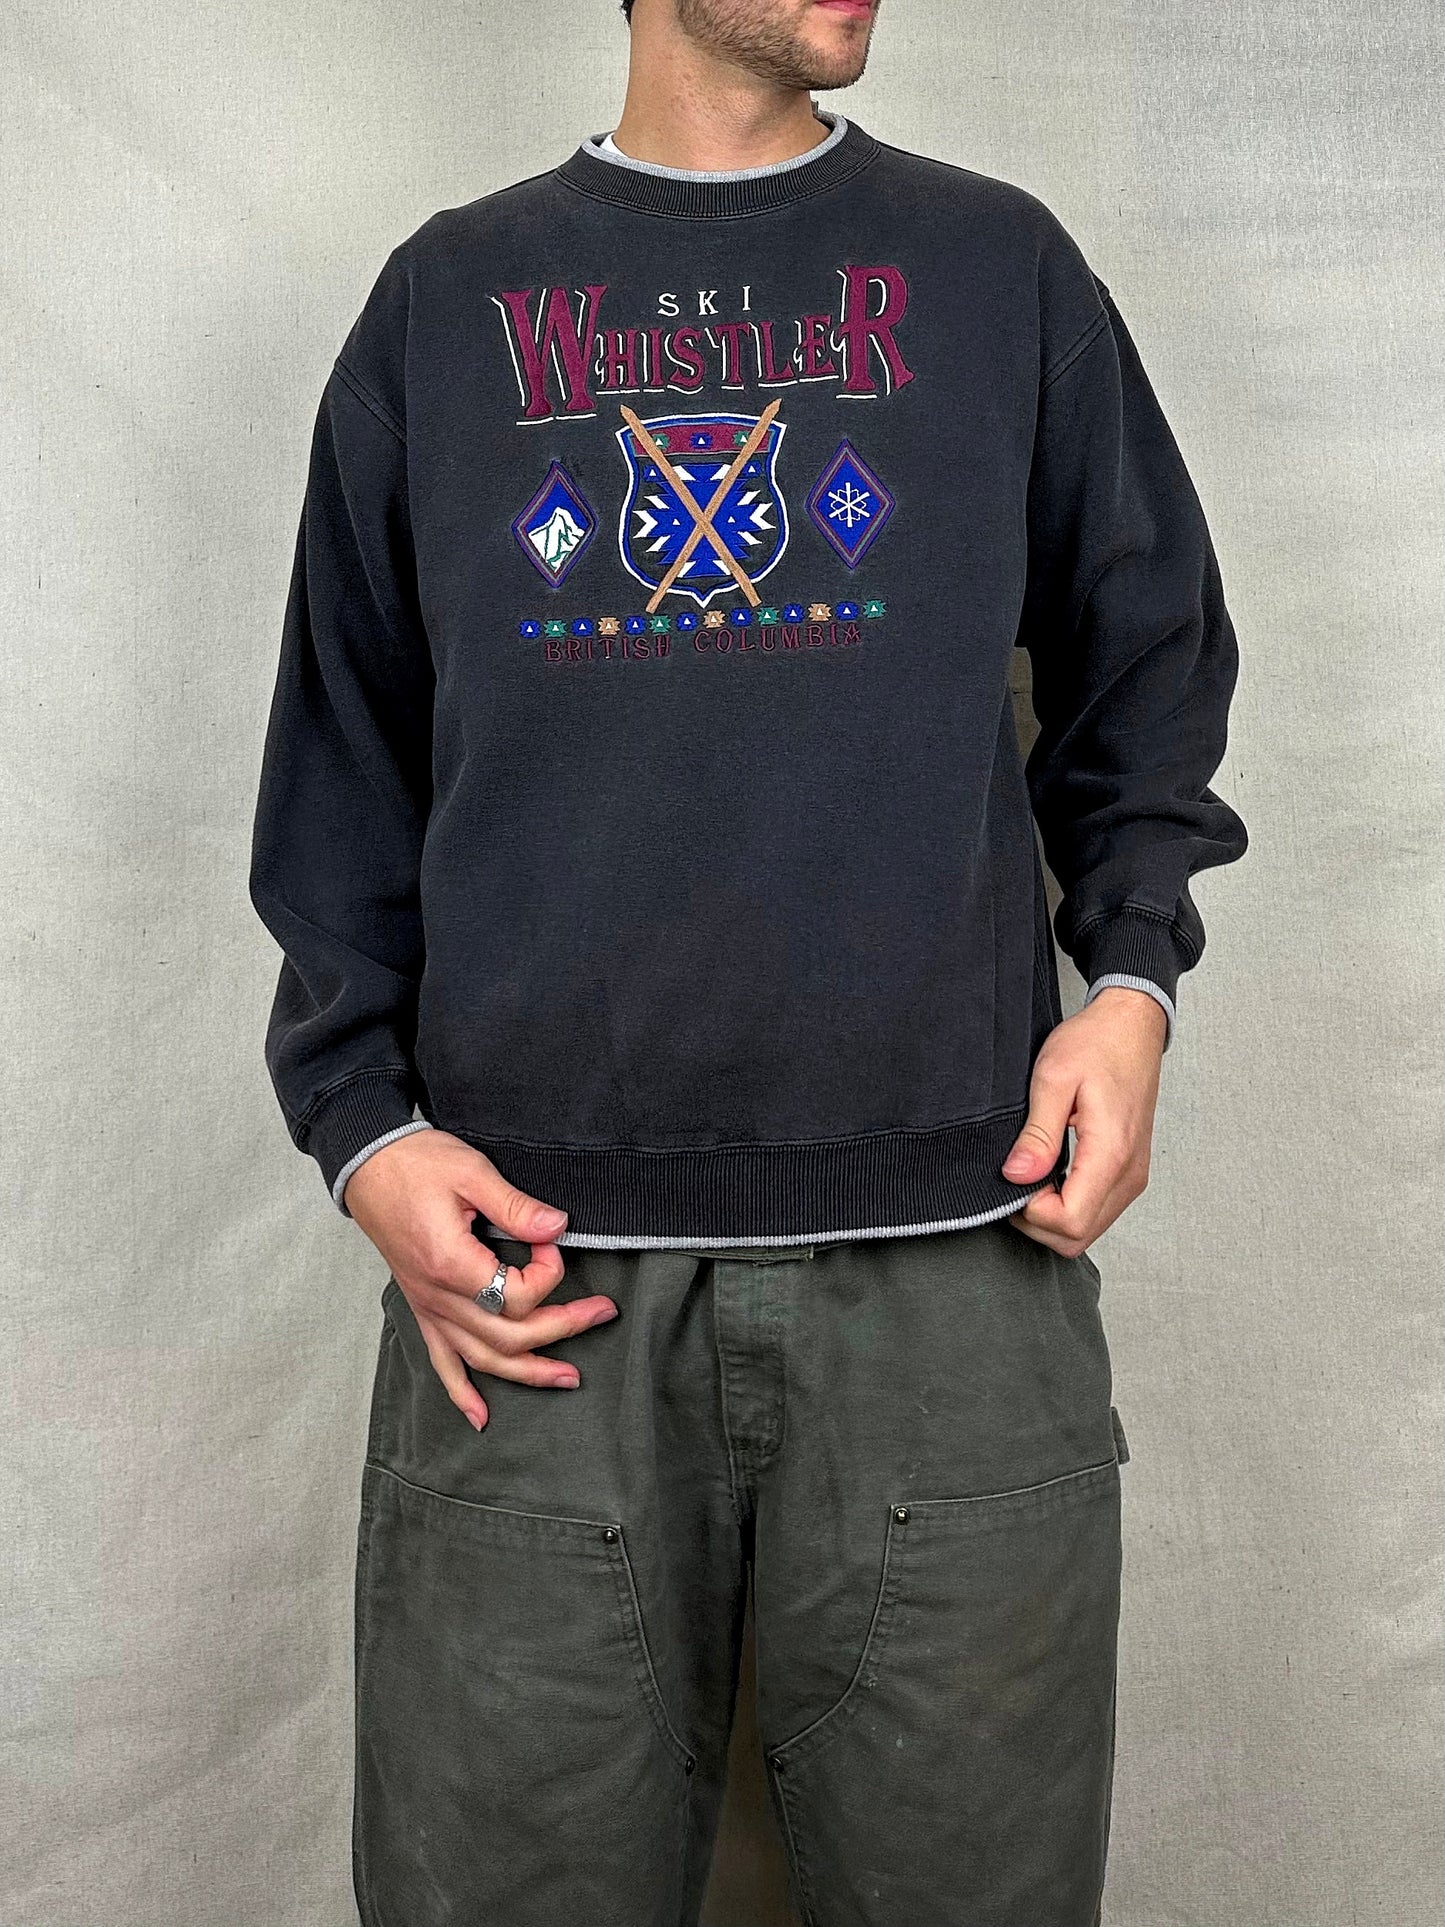 90's Whistler British Columbia Embroidered Vintage Sweatshirt Size M